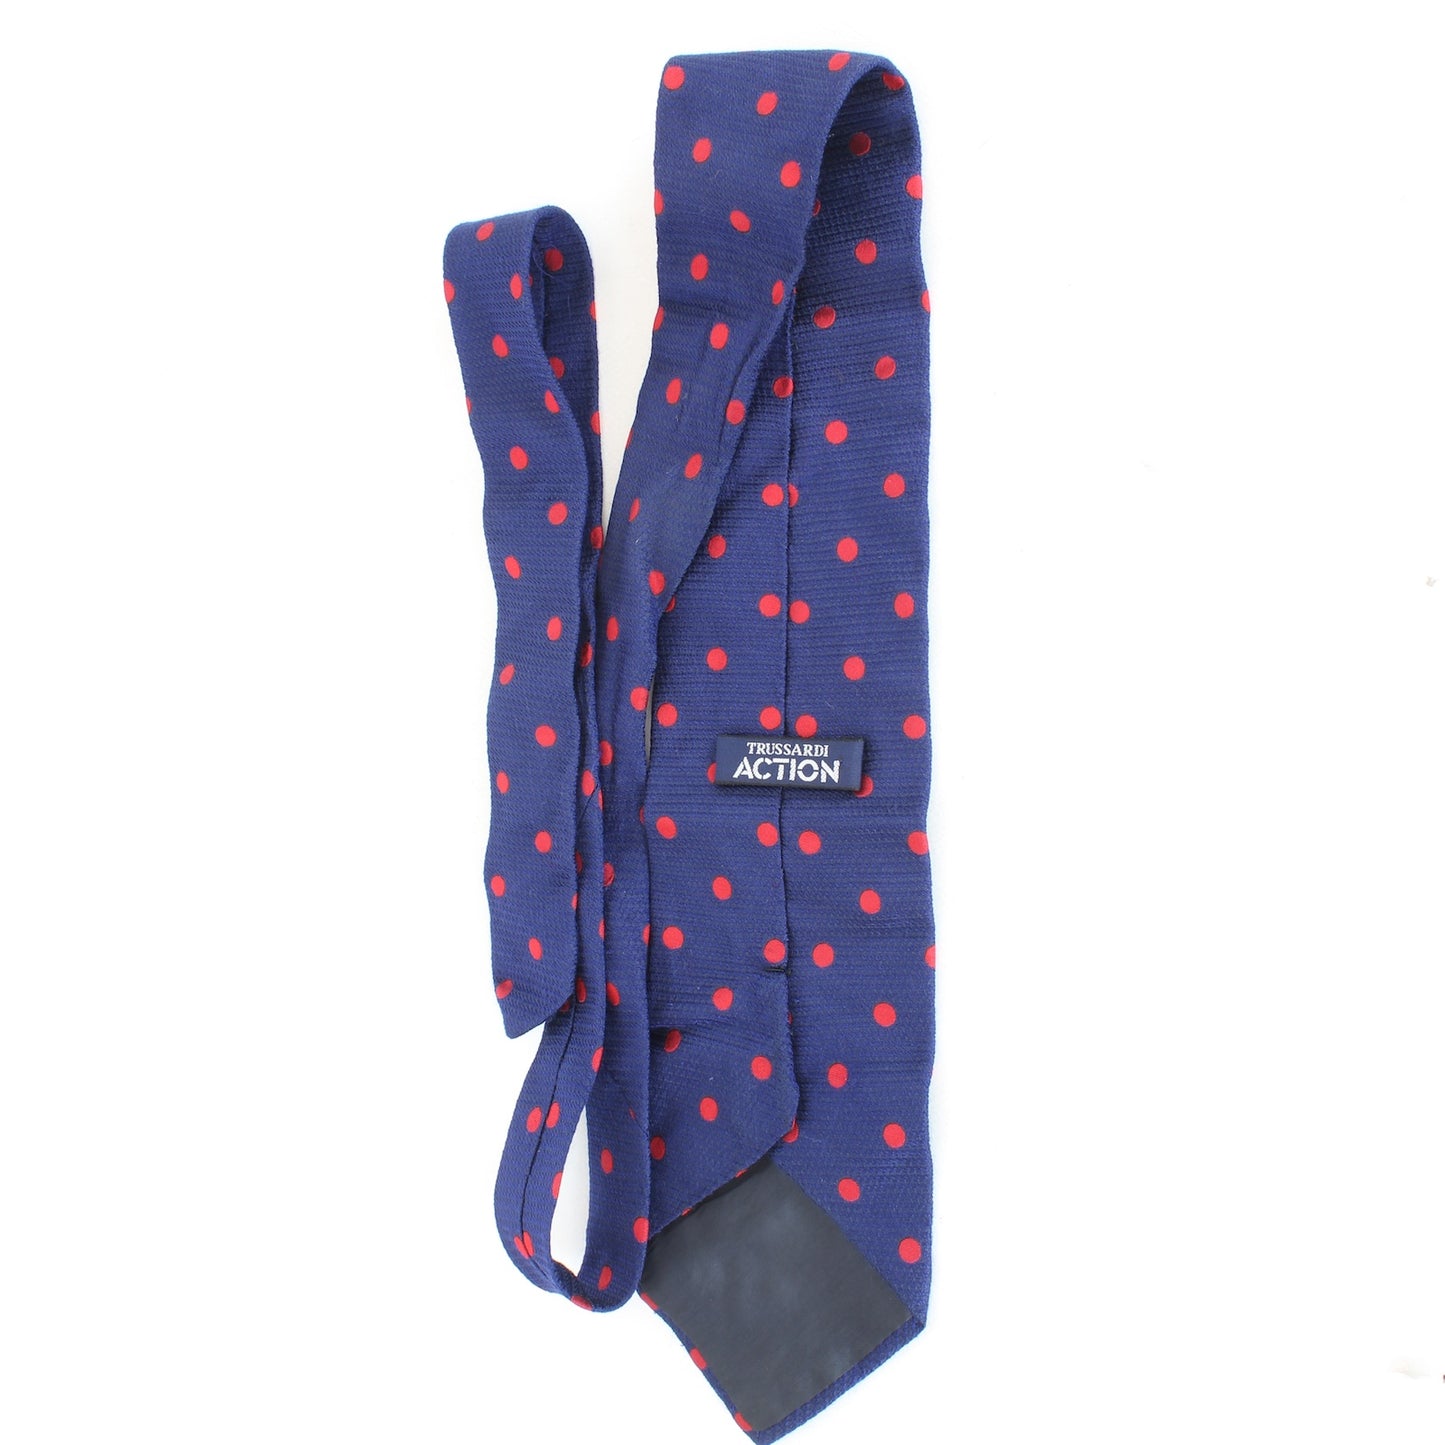 Trussardi Cravatta Seta Pois Blu Rossa Vintage Anni 90